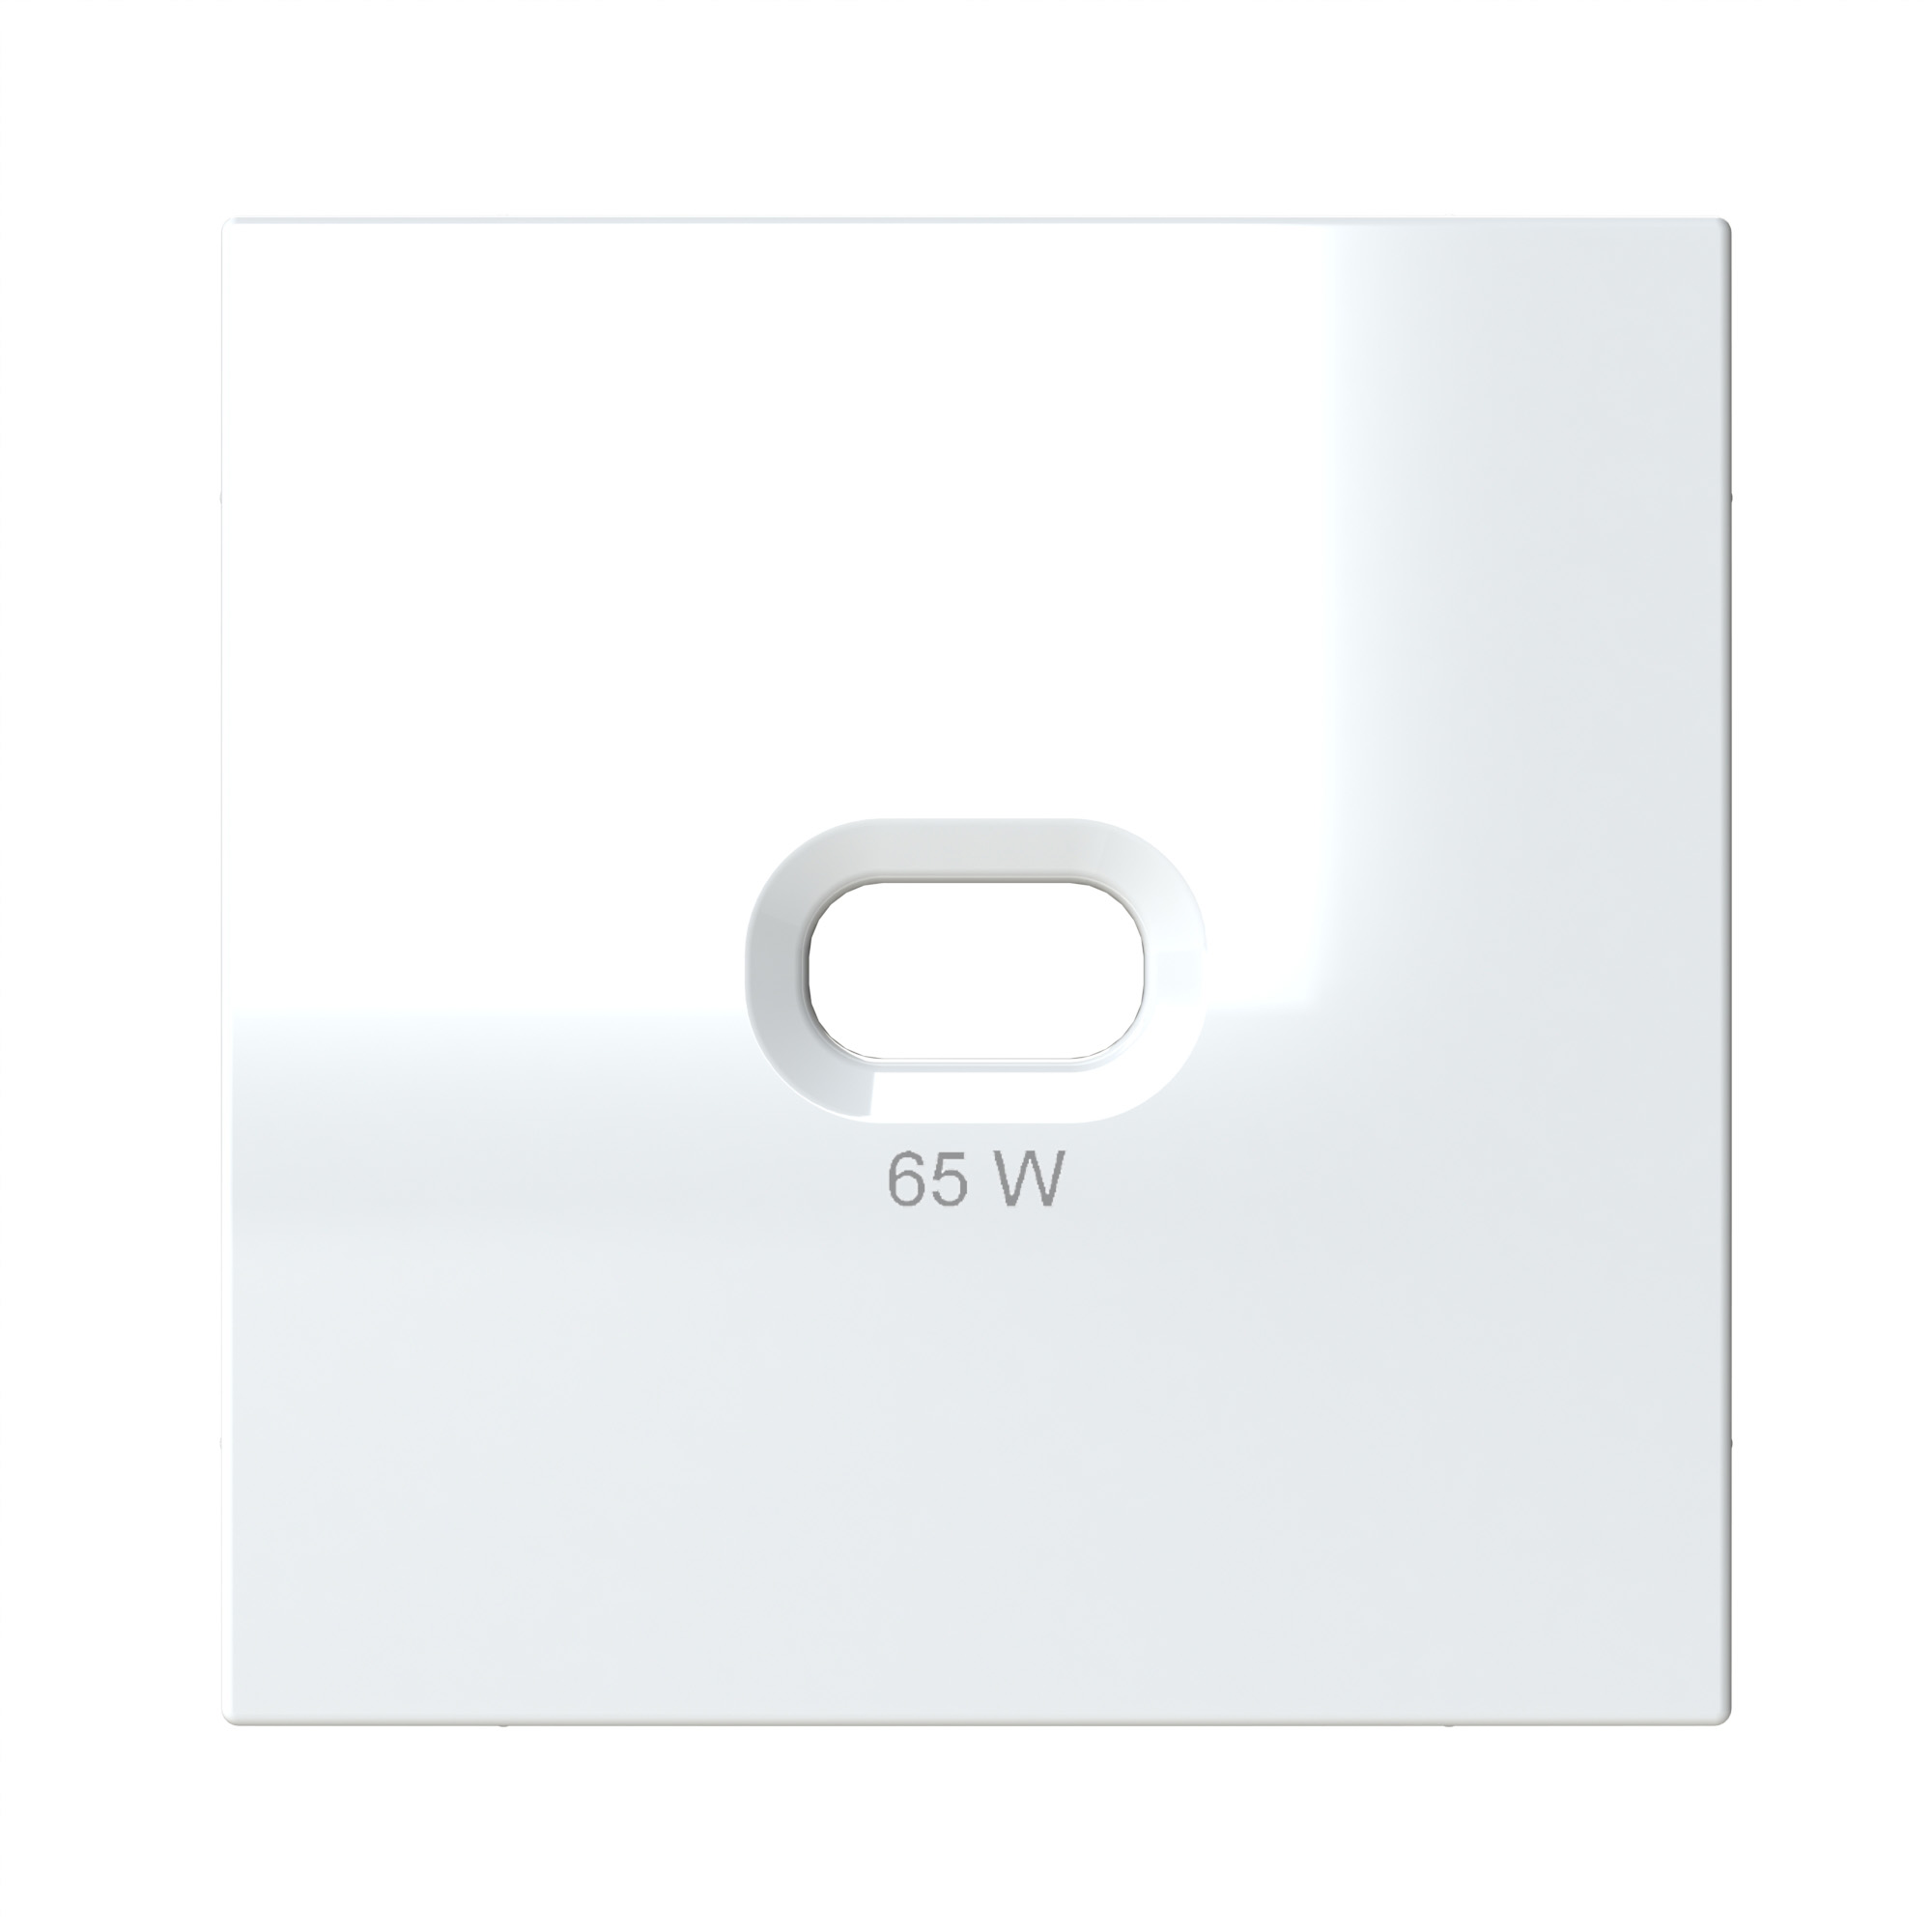 Abdeckplatte für OPUS 55 USB-C Steckdose, 65 W, polarweiß-seidenglanz